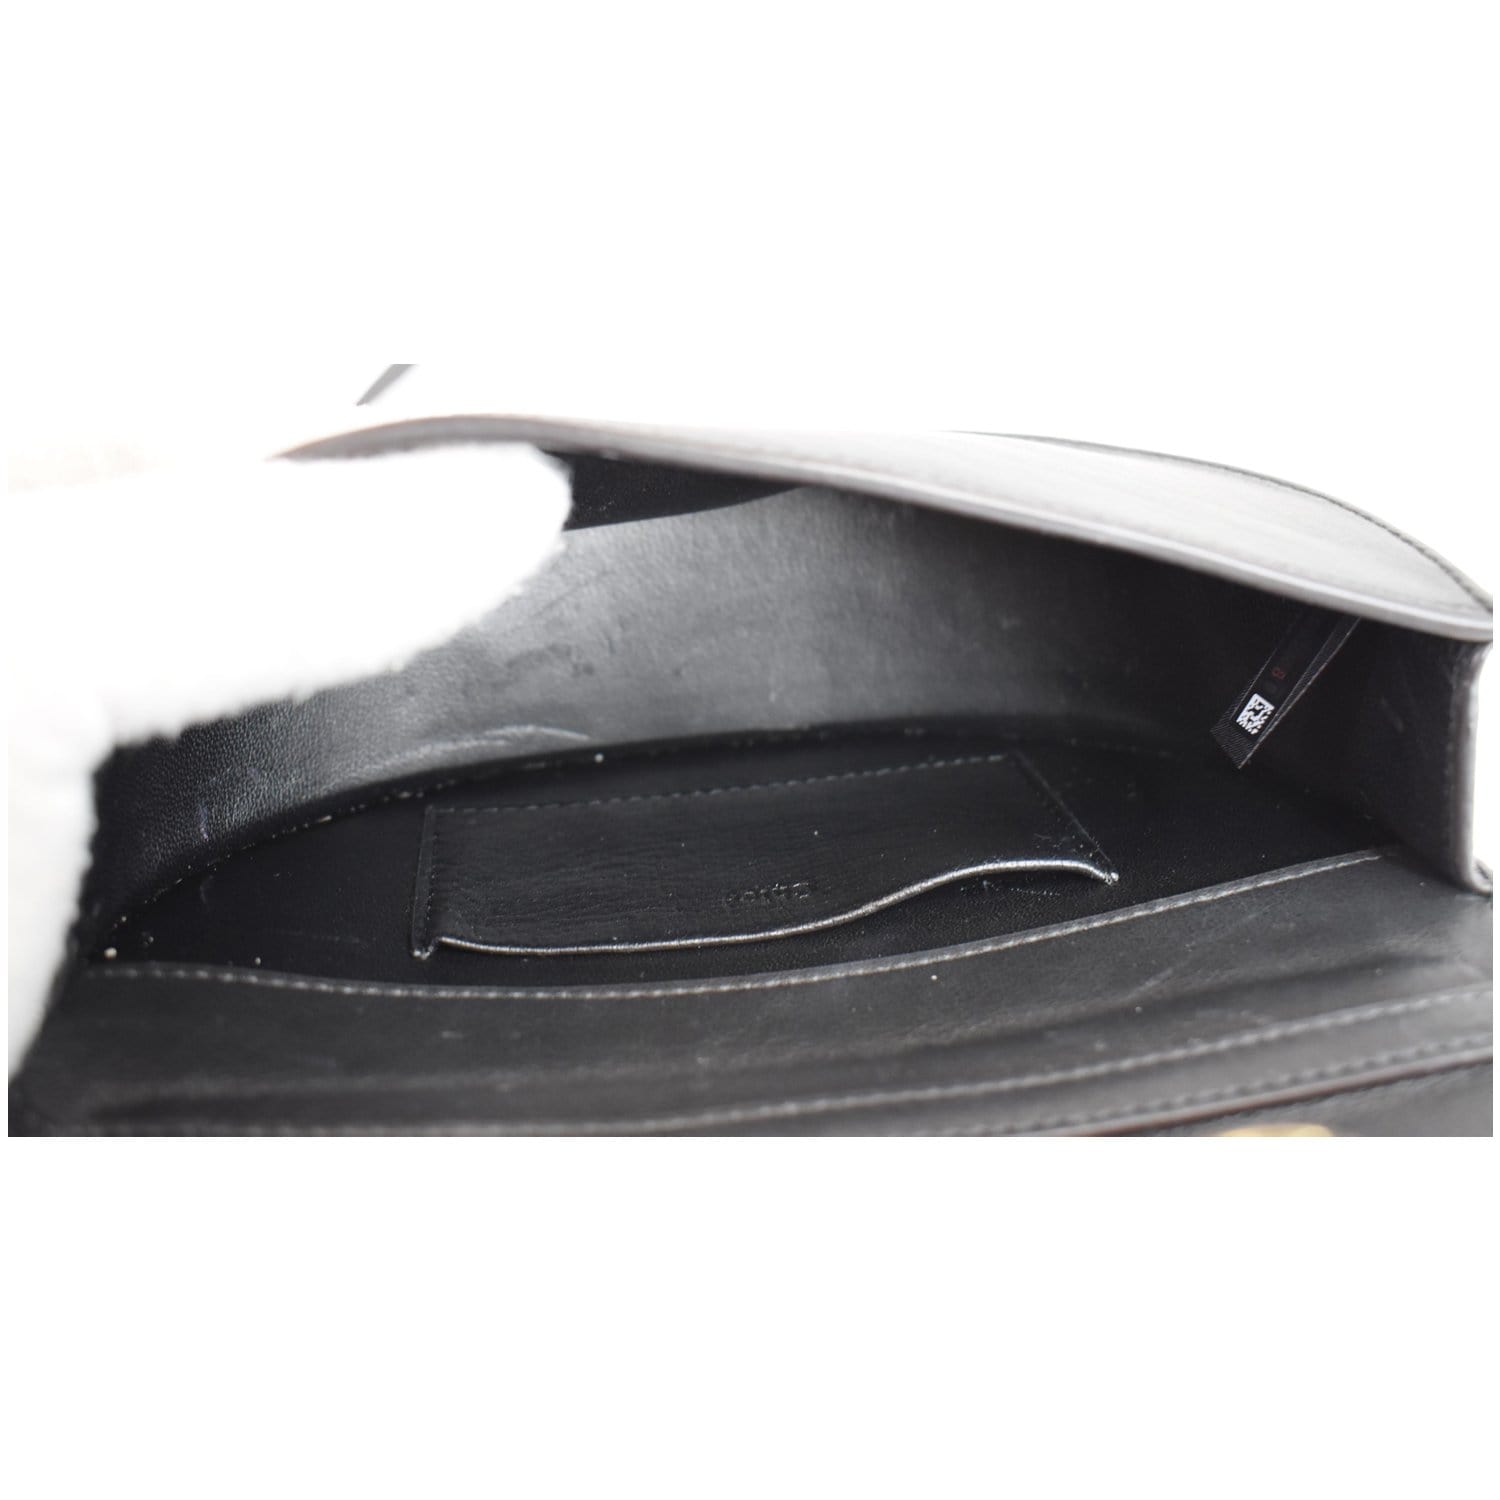 CHLOE Calfskin Small Nile Bracelet Minaudiere Bag Black 227362